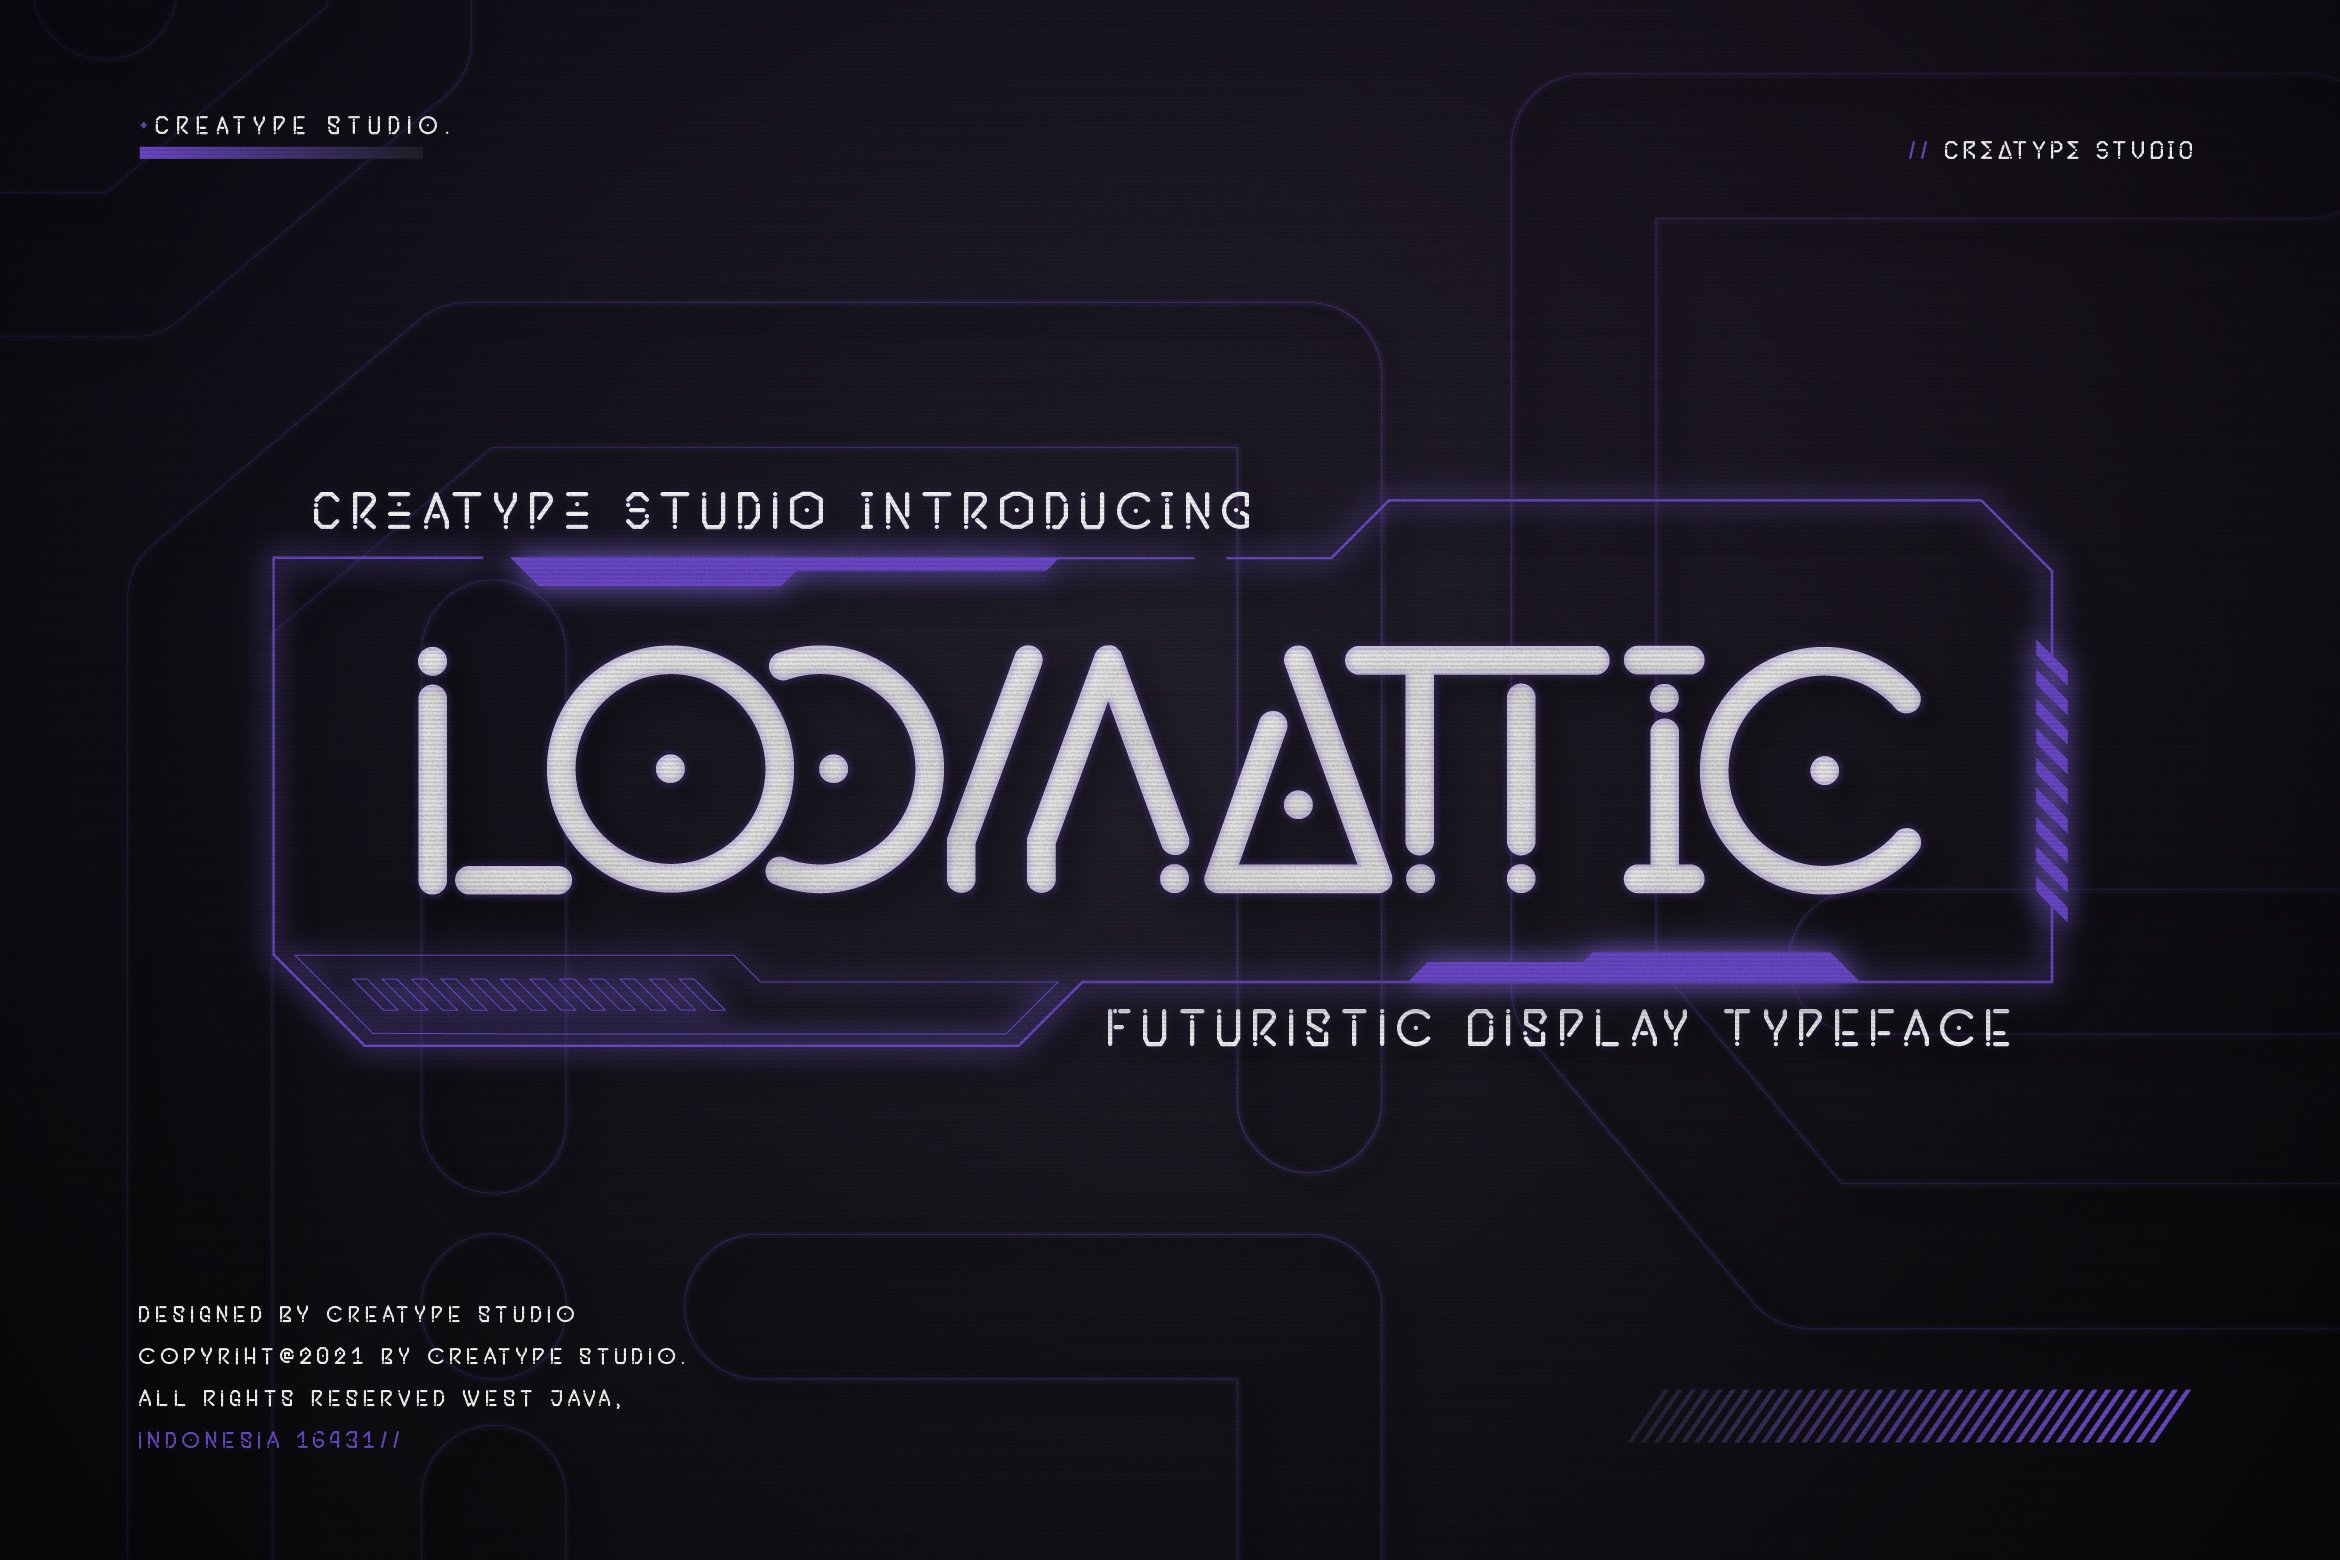 Loomattic Futuristic Business Font cover image.